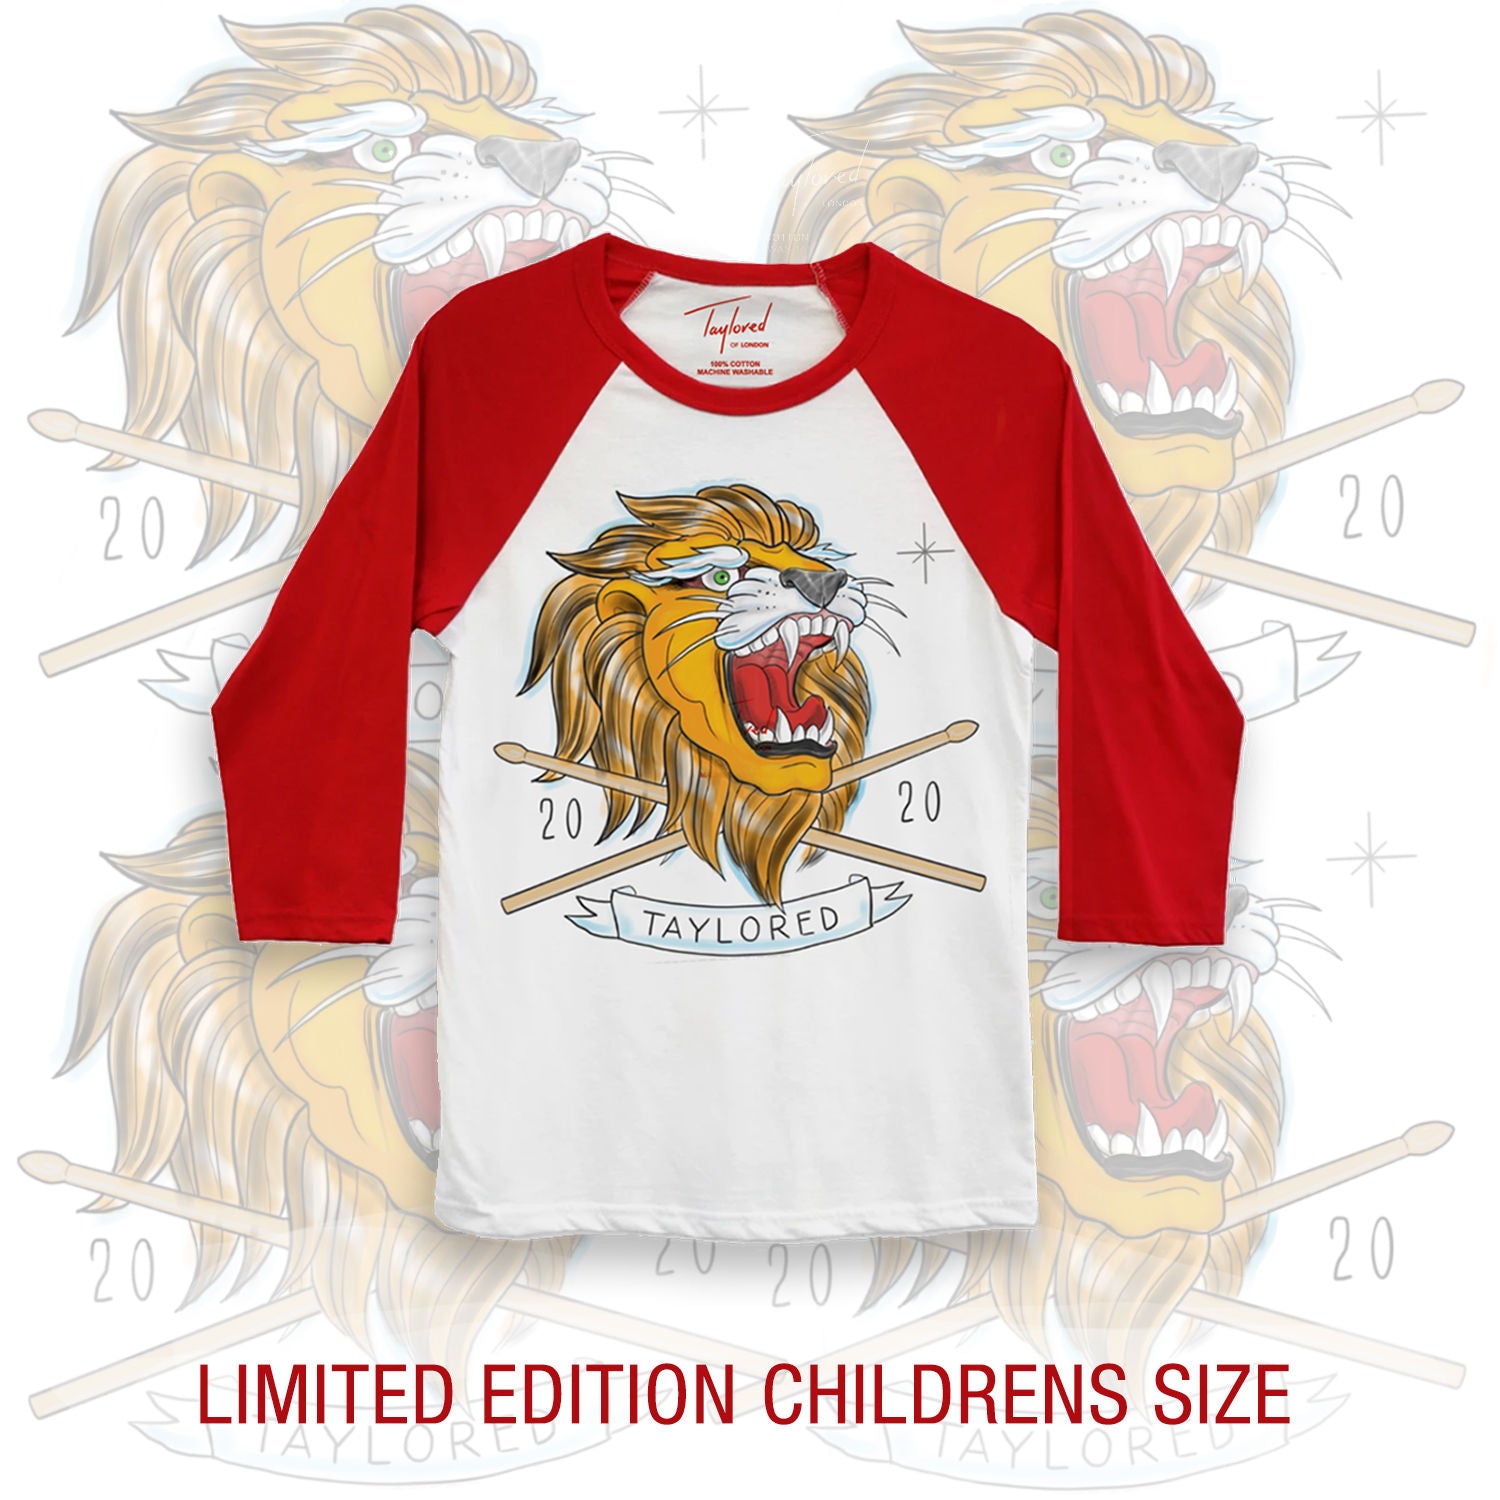 Roger Taylor - Taylored 2020 Lion Childrens Red Baseball Shirt 